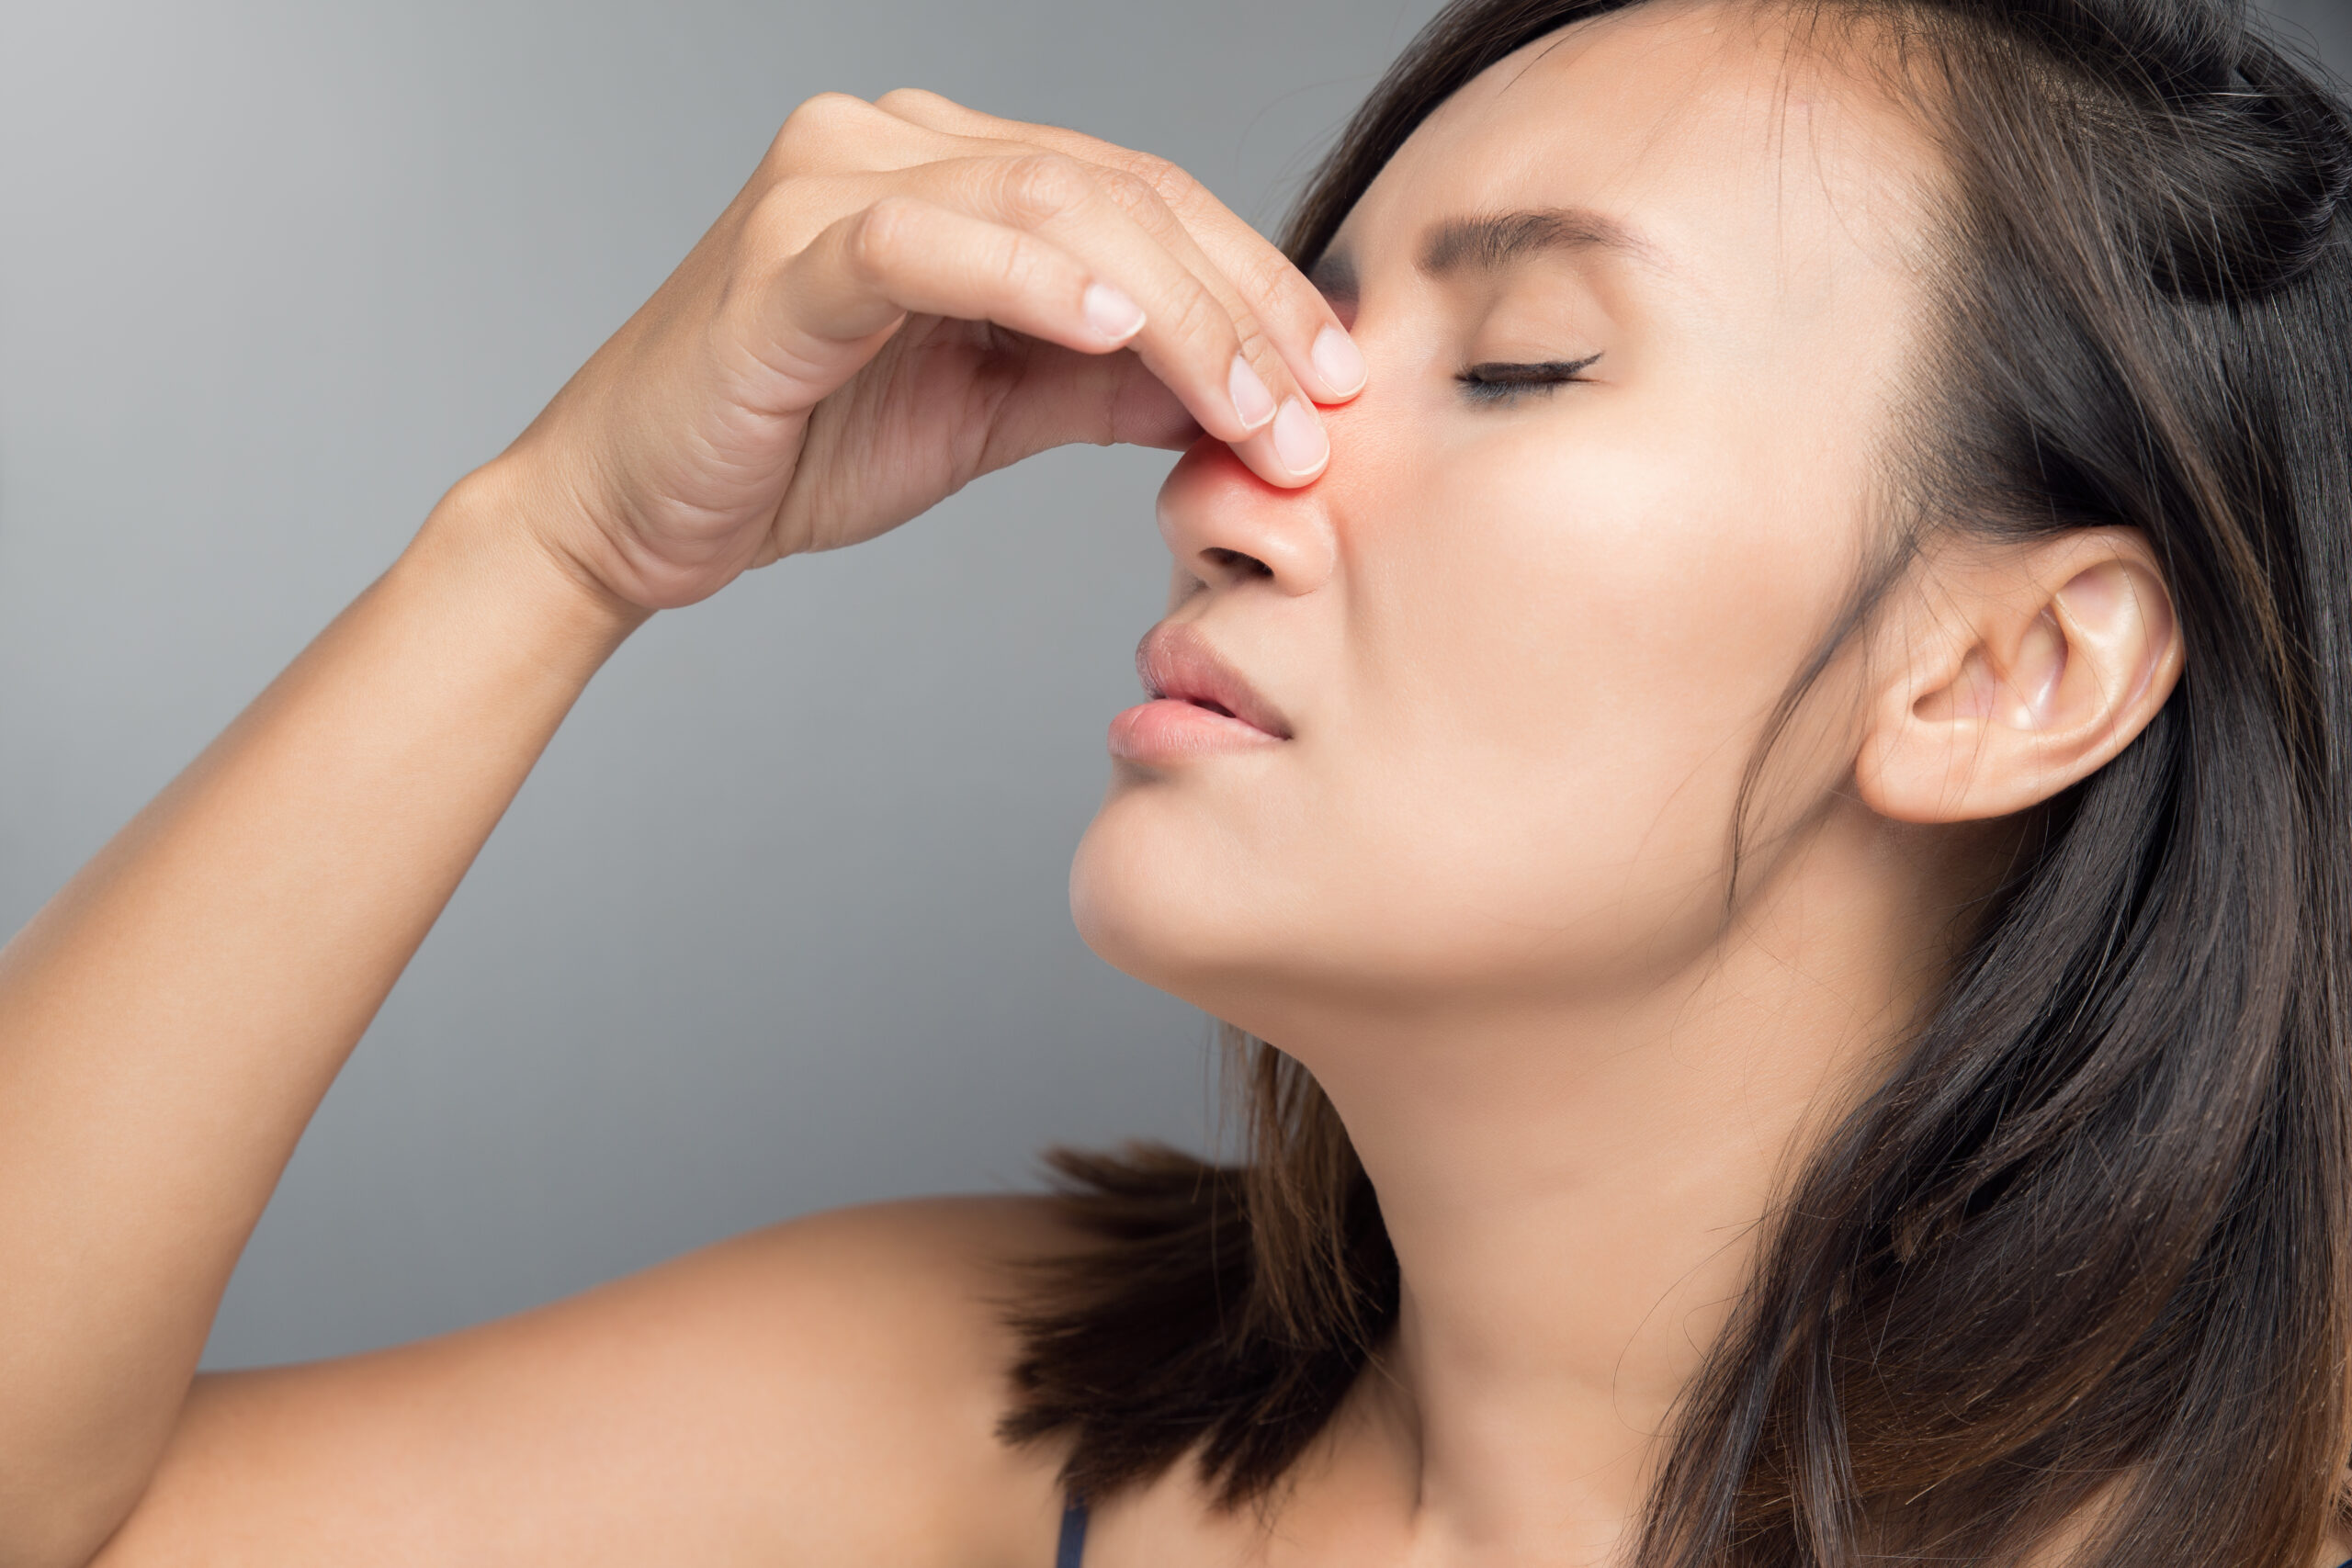 6 Common Symptoms of Nasal Polyps